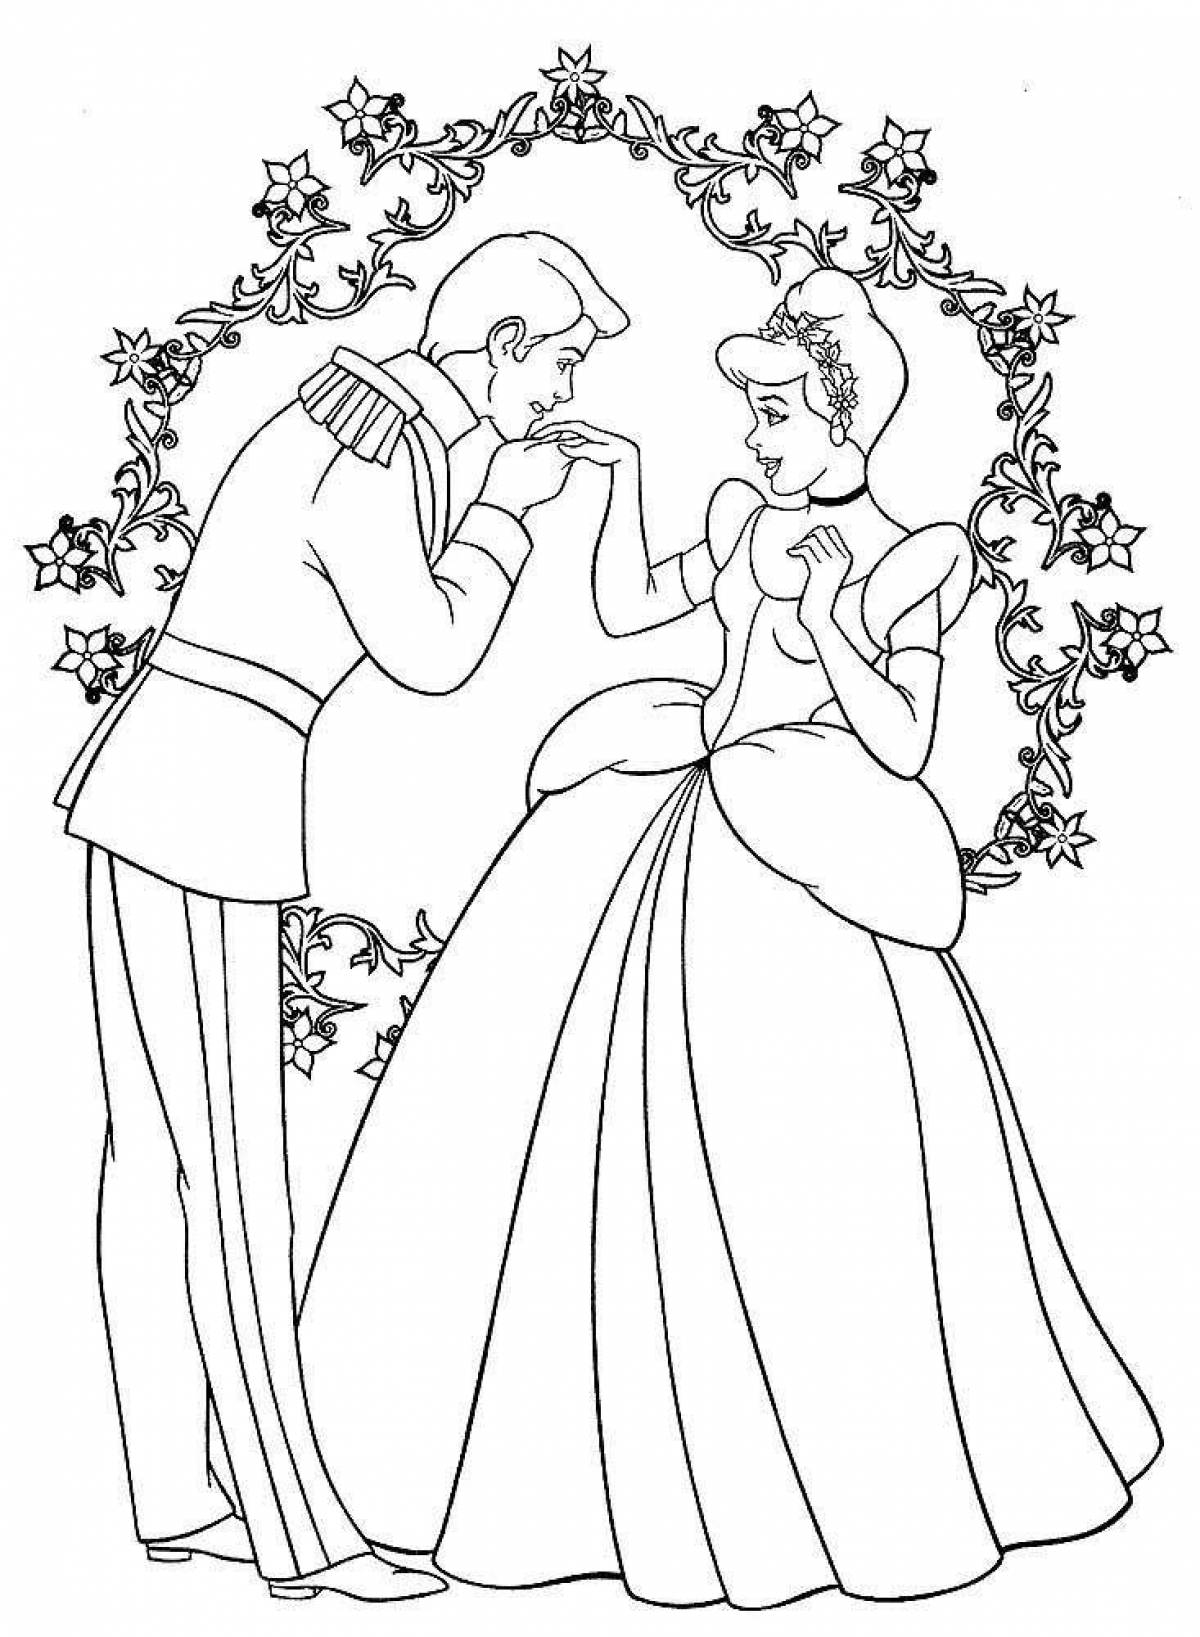 Great prince and princess coloring book